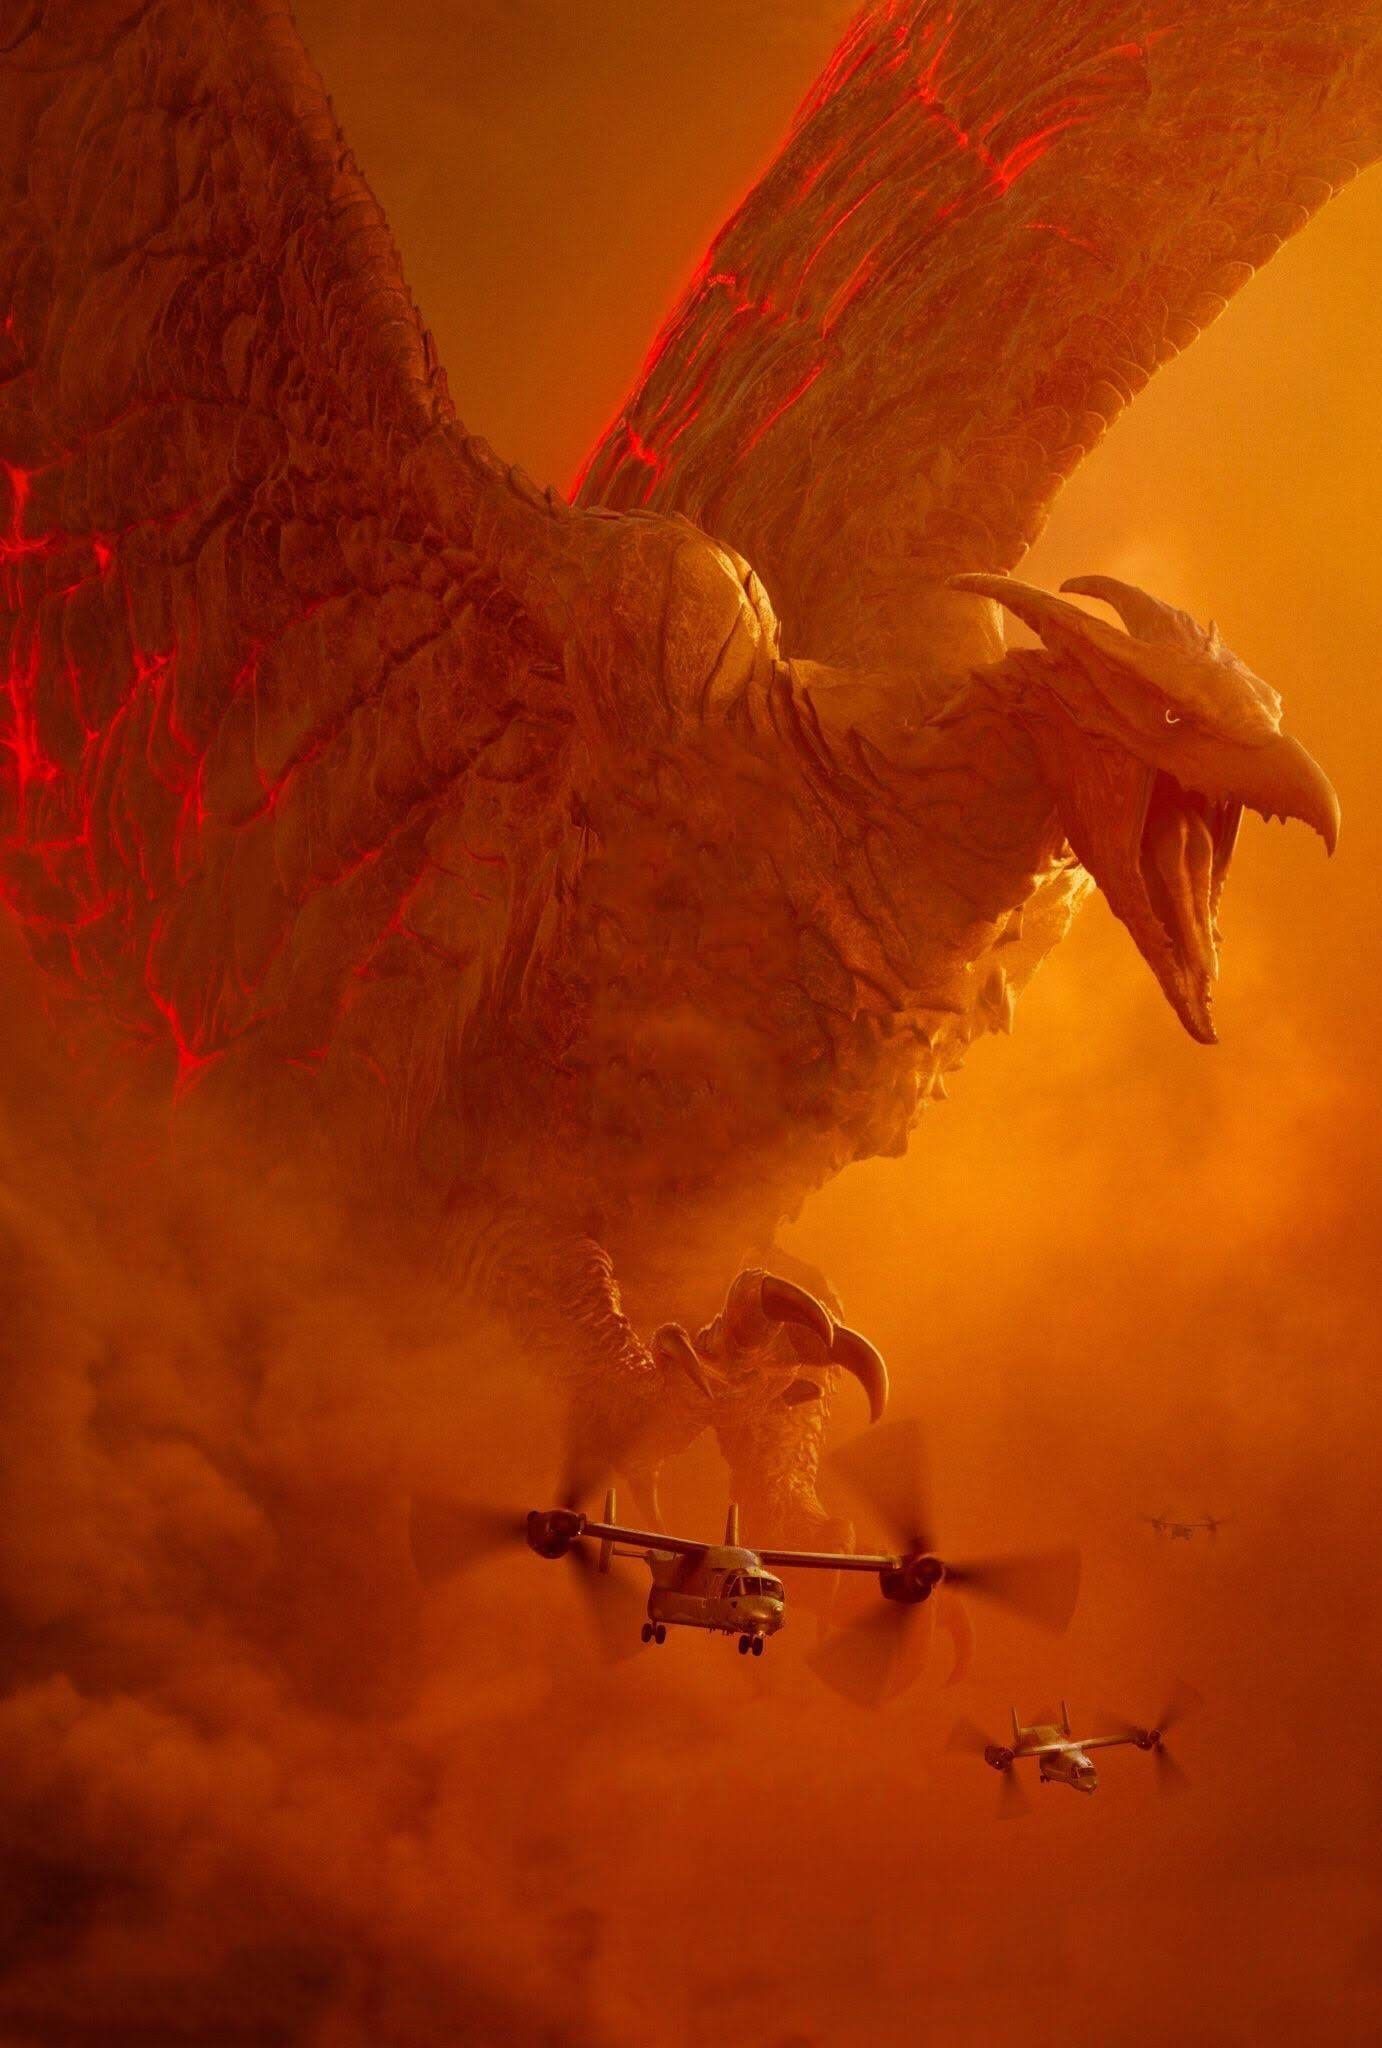 Pin by Remnant on Monsters in 2019 Godzilla wallpaper Godzilla